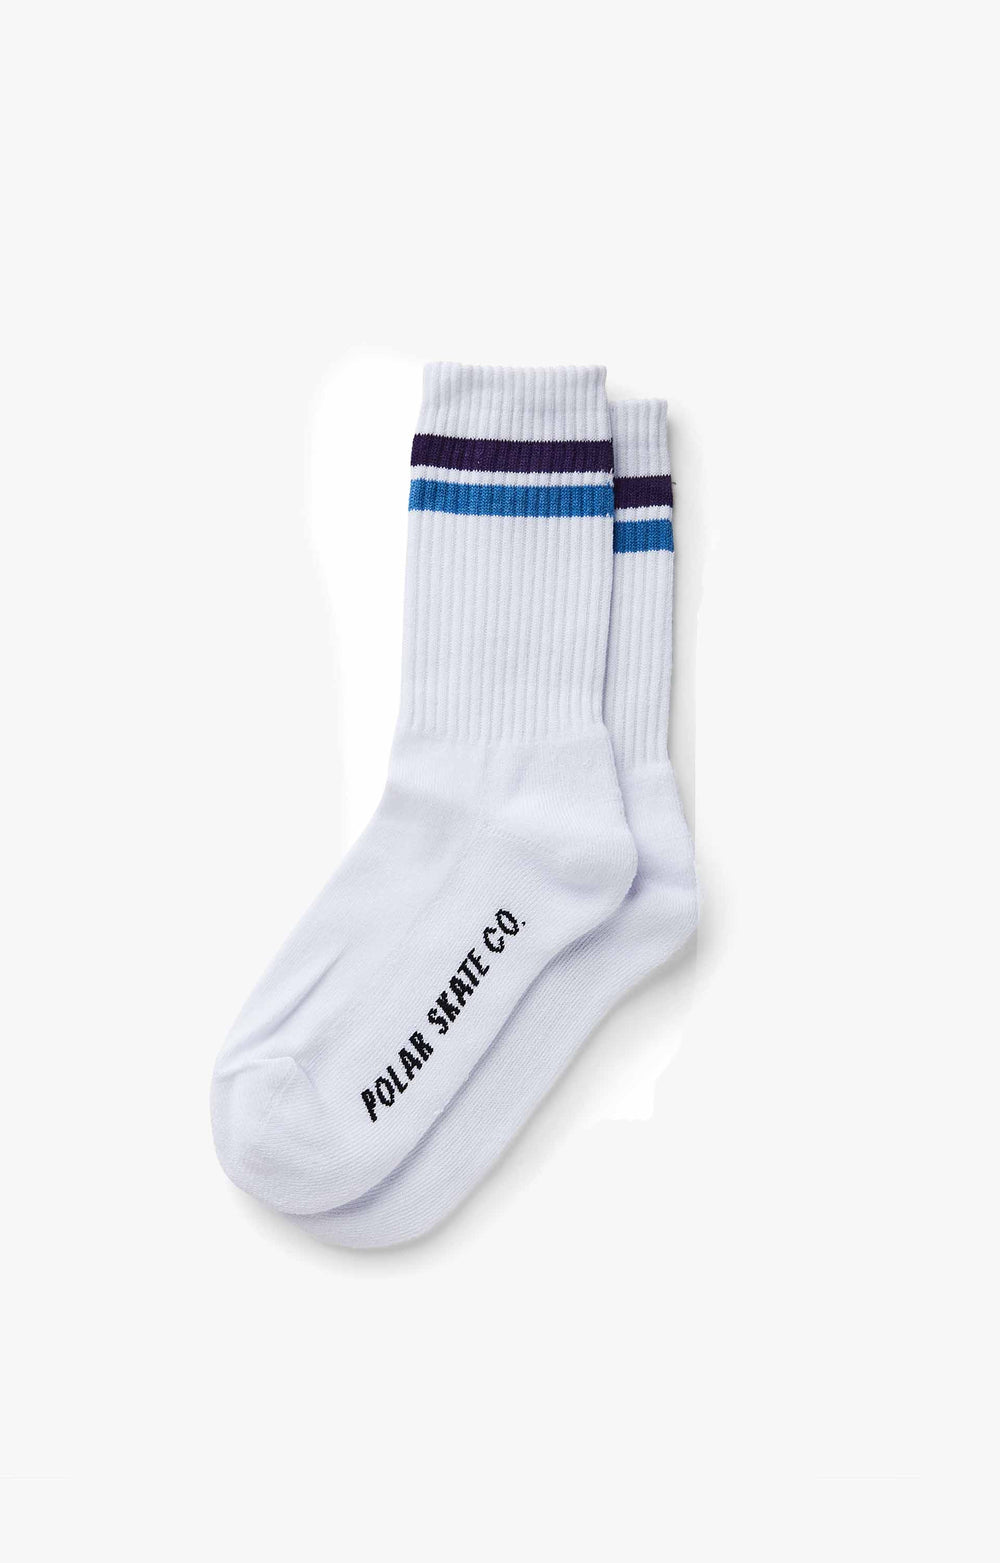 Polar Skate Co Stripe Socks, White/Purple/Blue